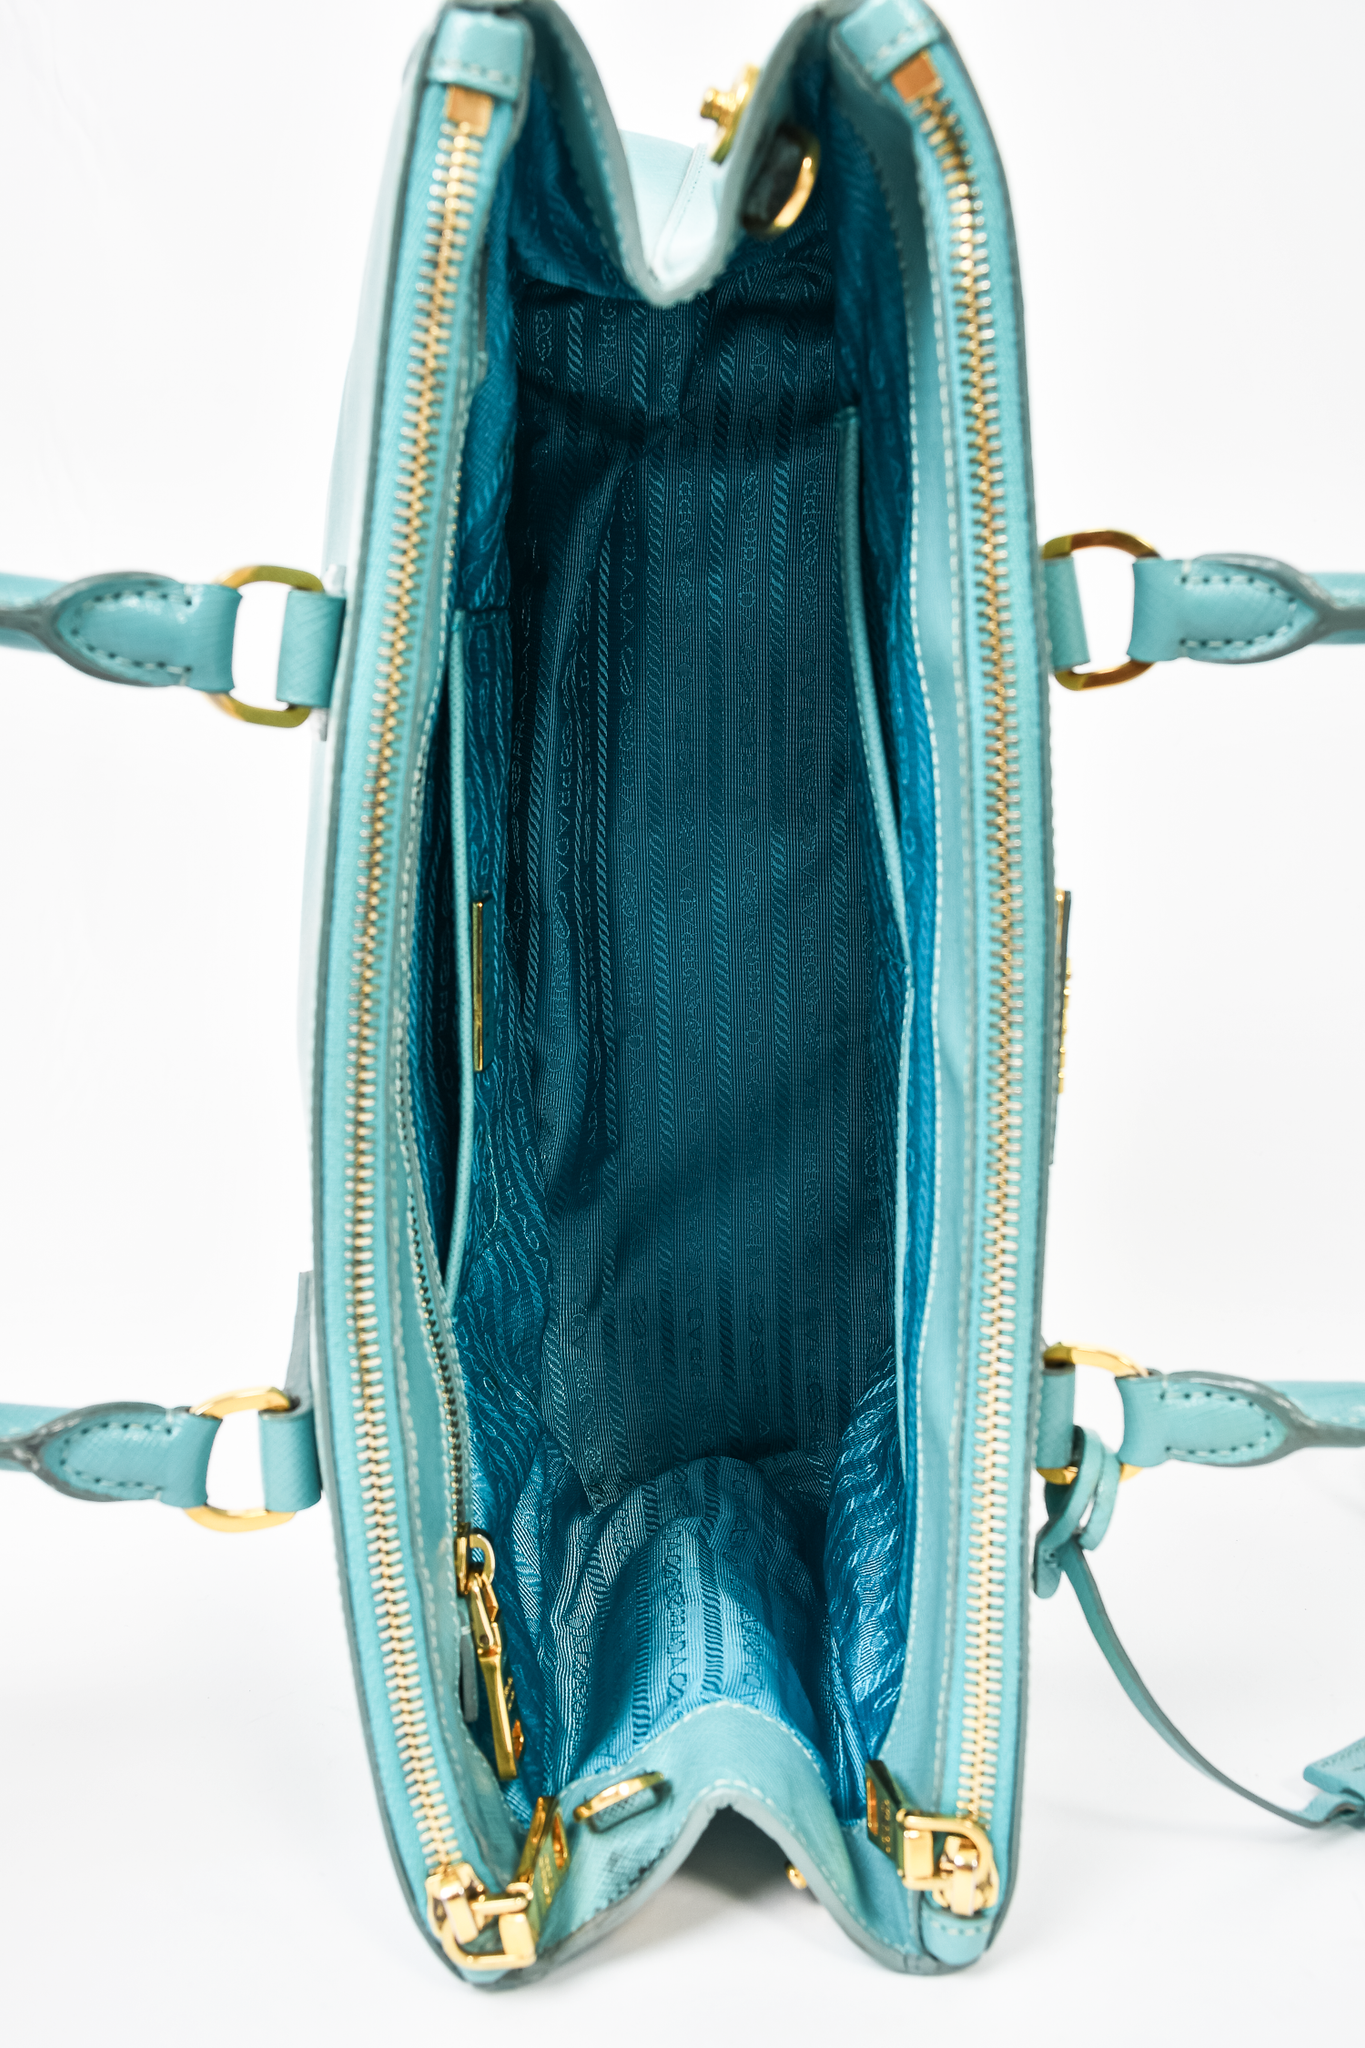 Authentic Prada Galleria Double Zip Mini Leather Tote Teal